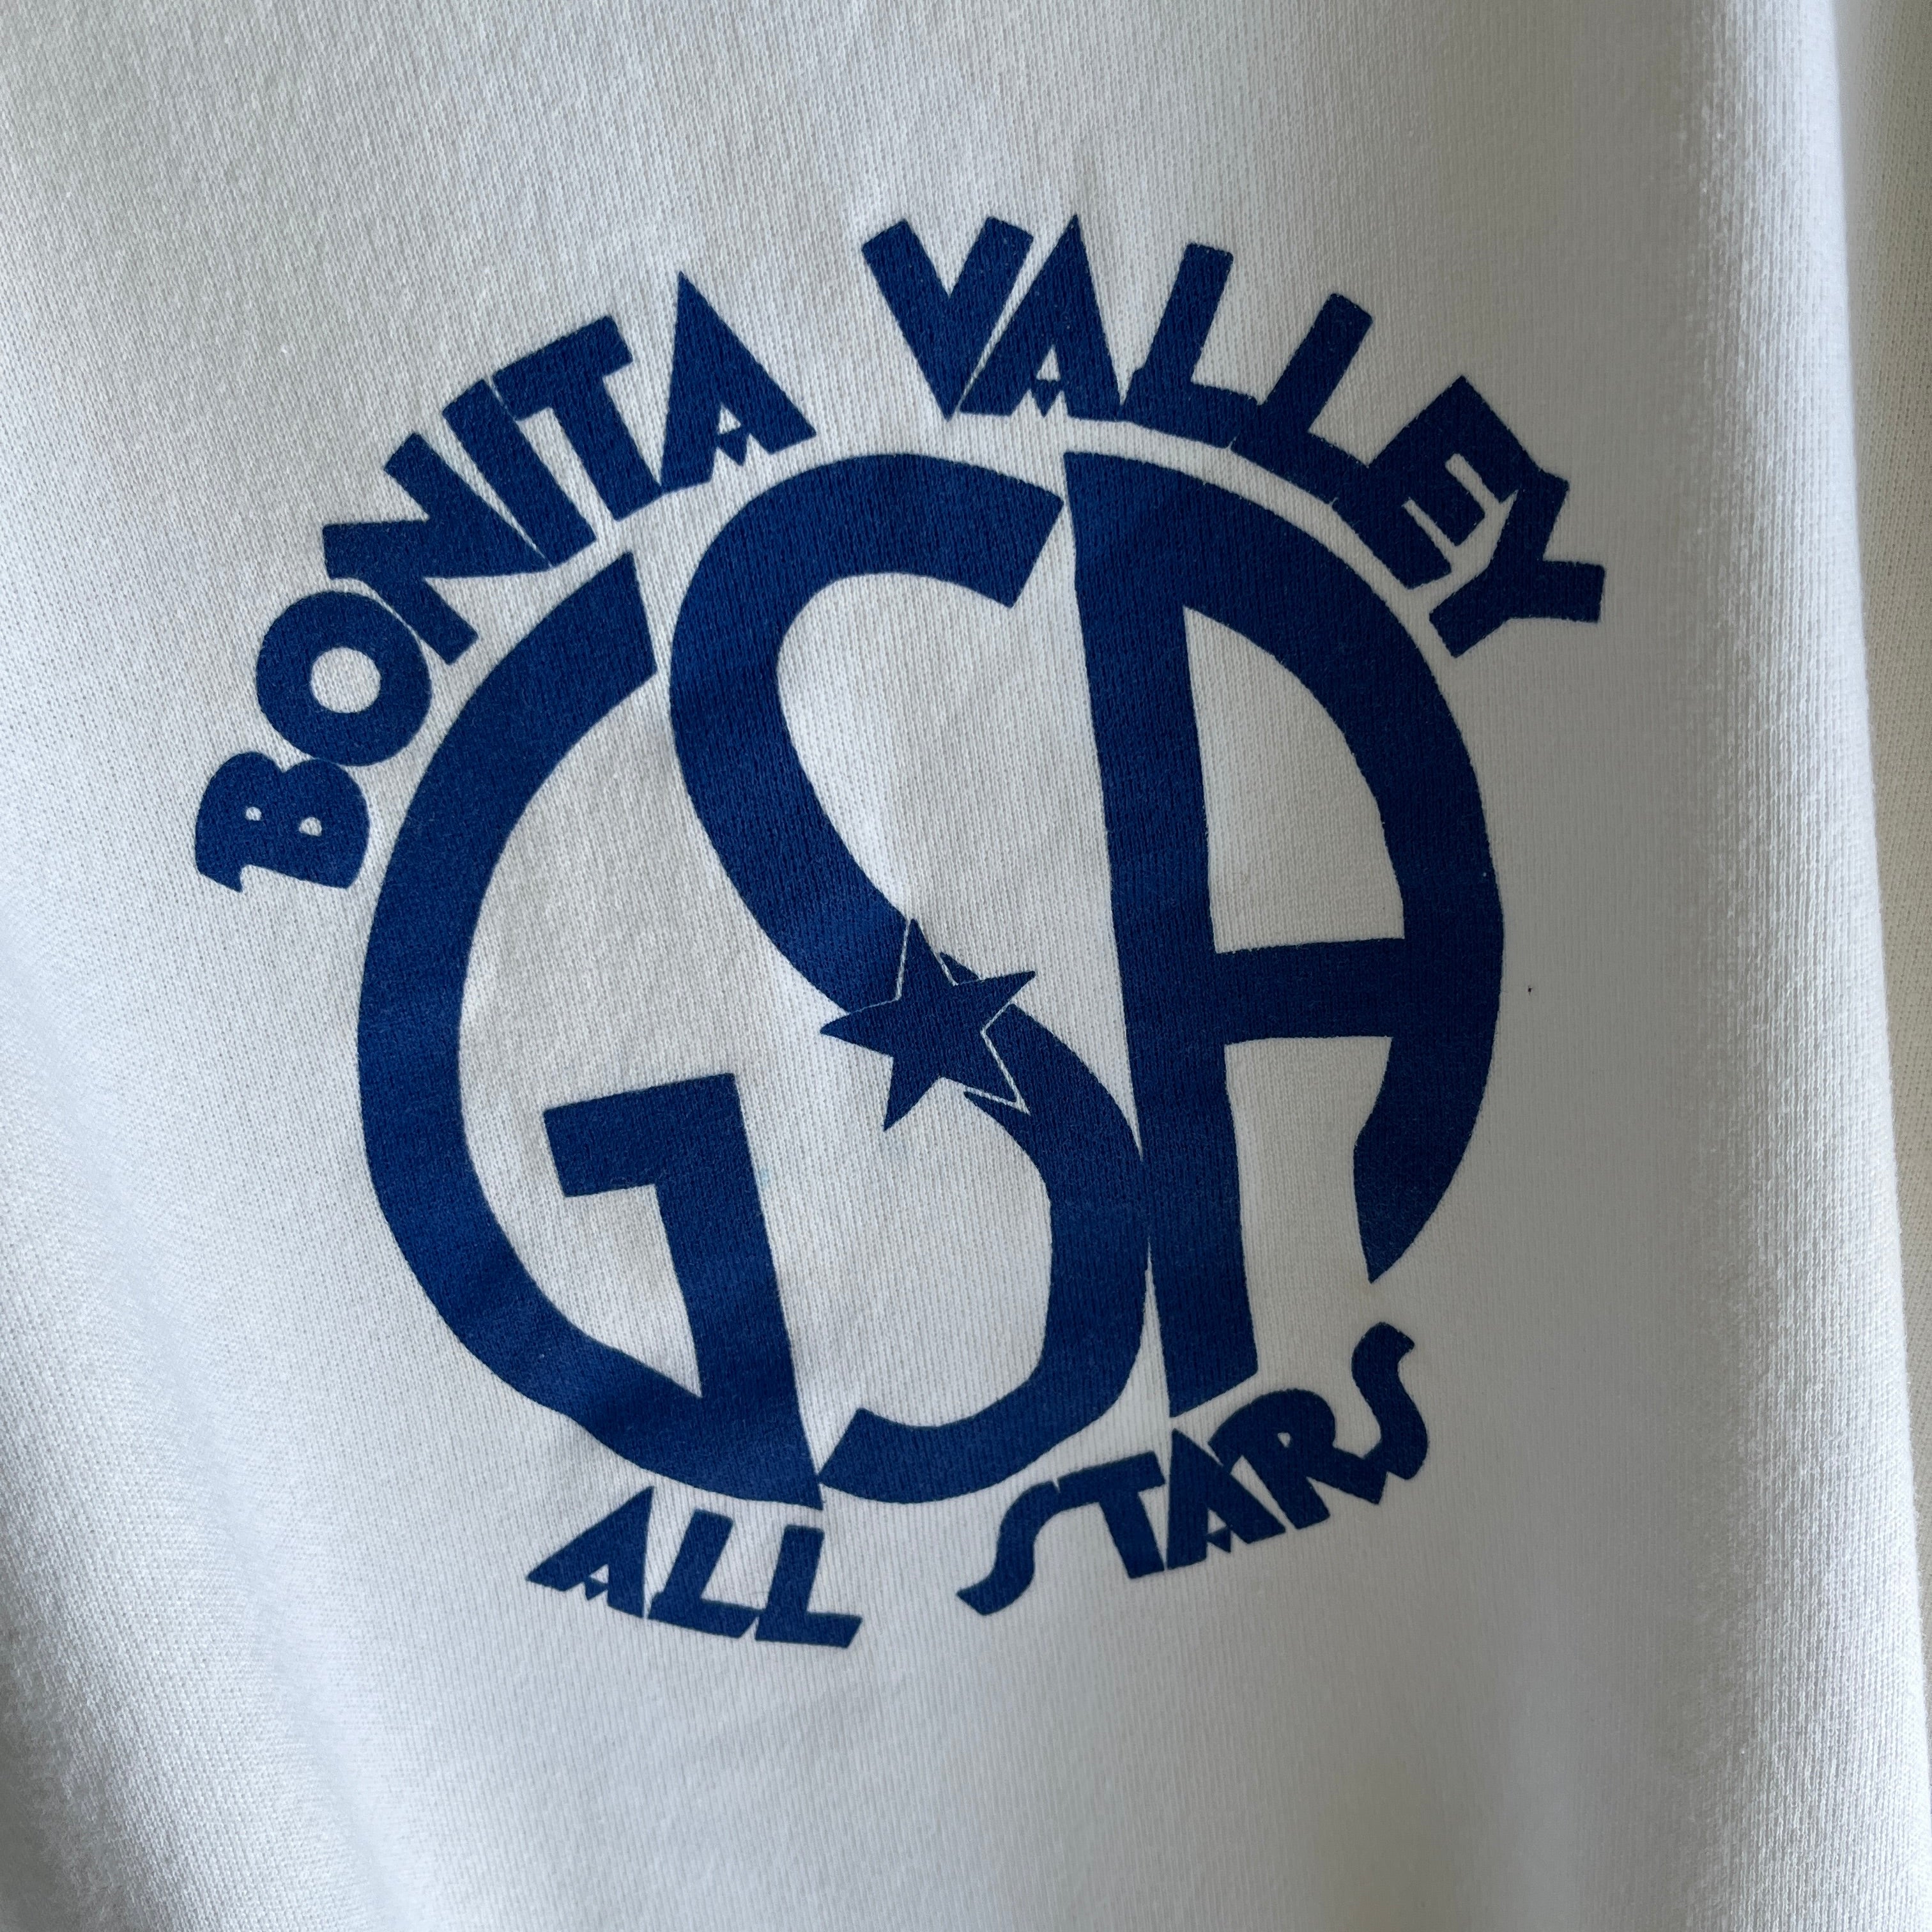 1980s John's Bonita Valley All Stars Hoodie by Hanes - Great Shape!